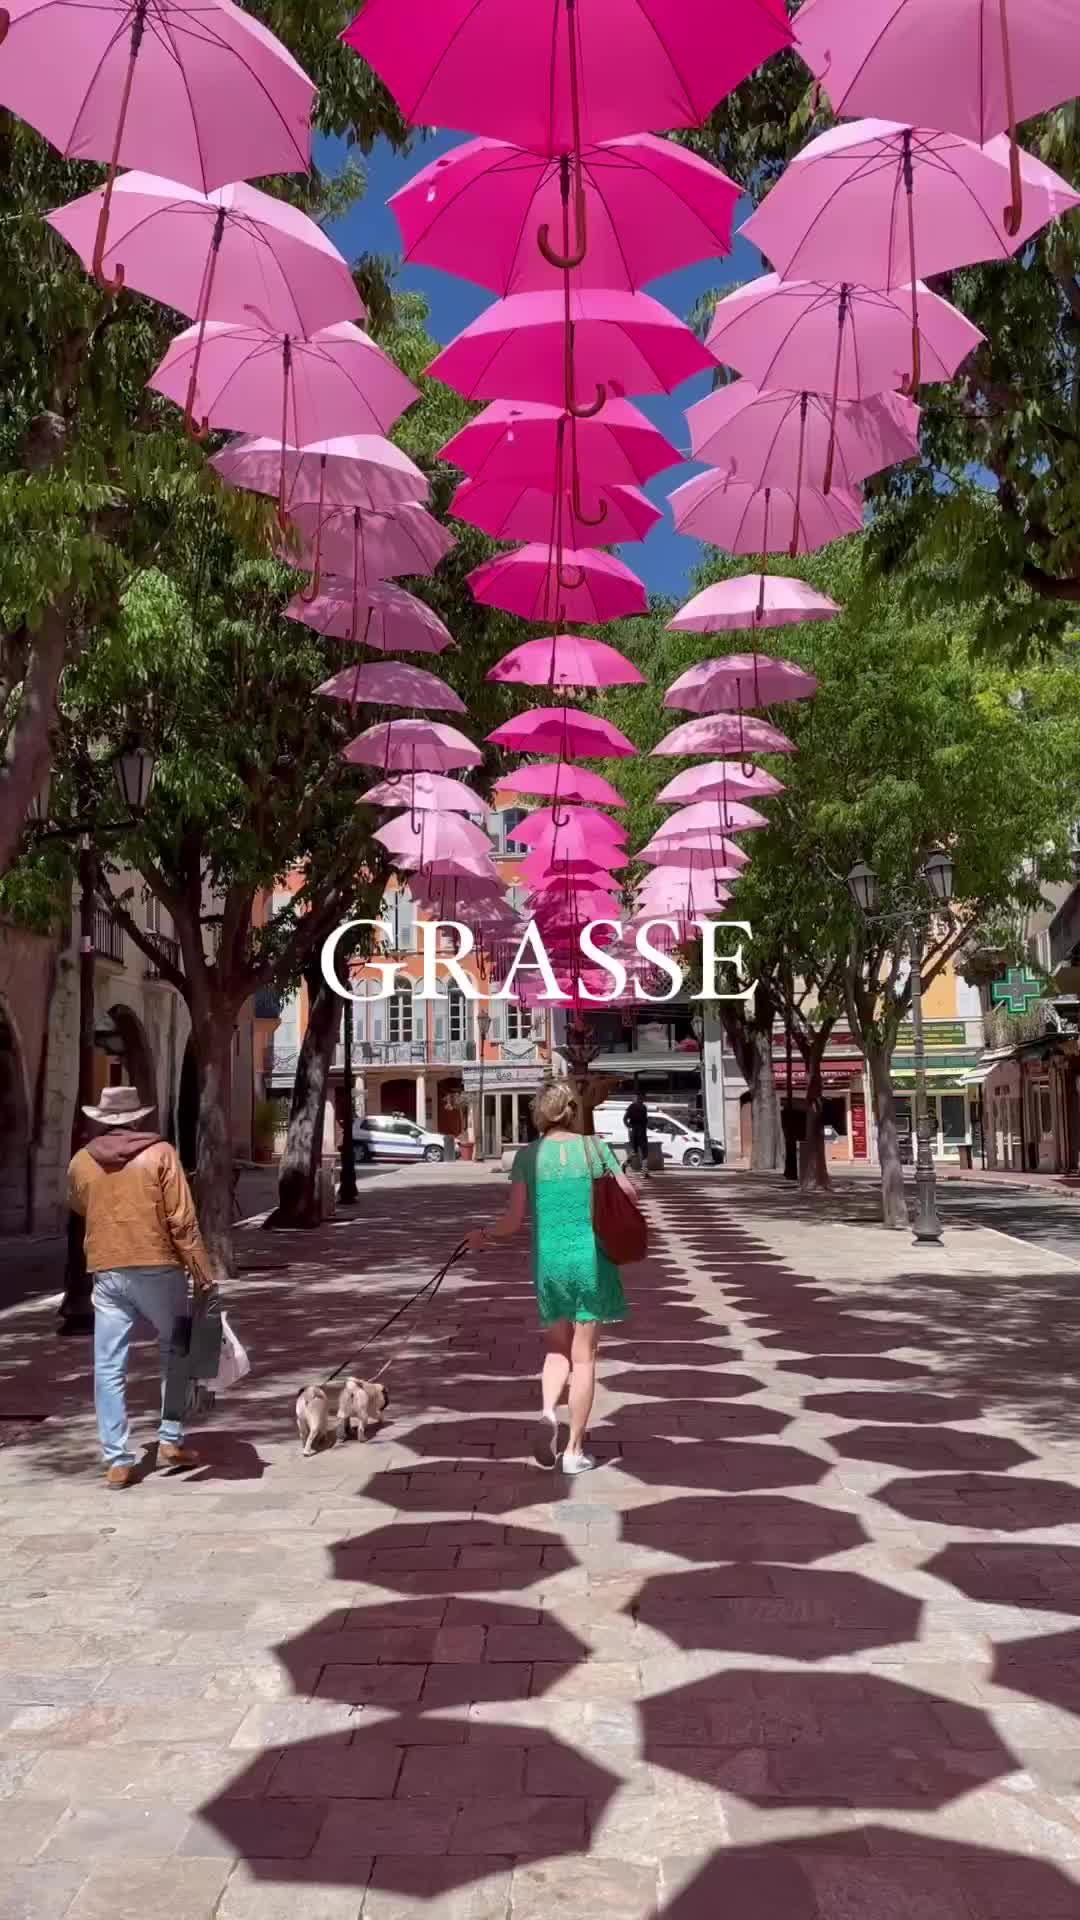 Exploring the Pink Umbrella Streets of Grasse 🇫🇷✨